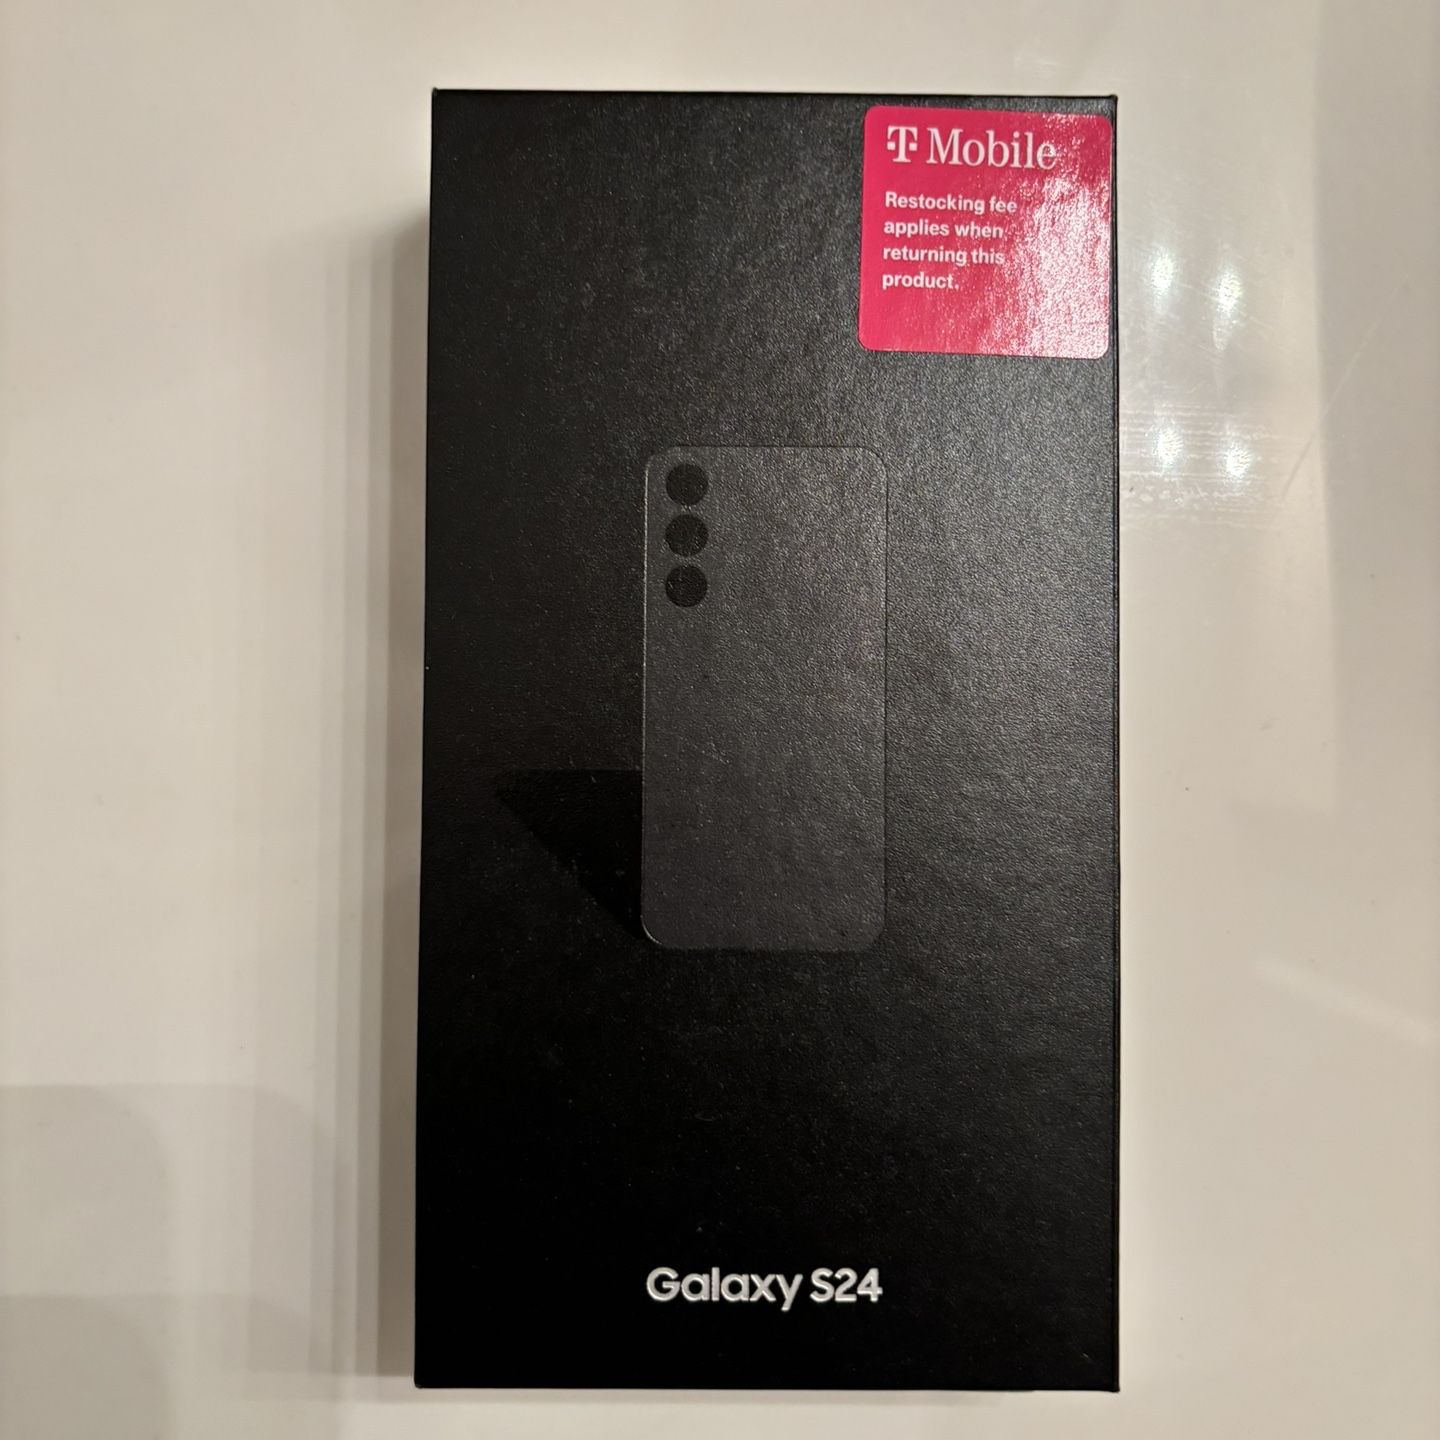 Galaxy S24 New In box